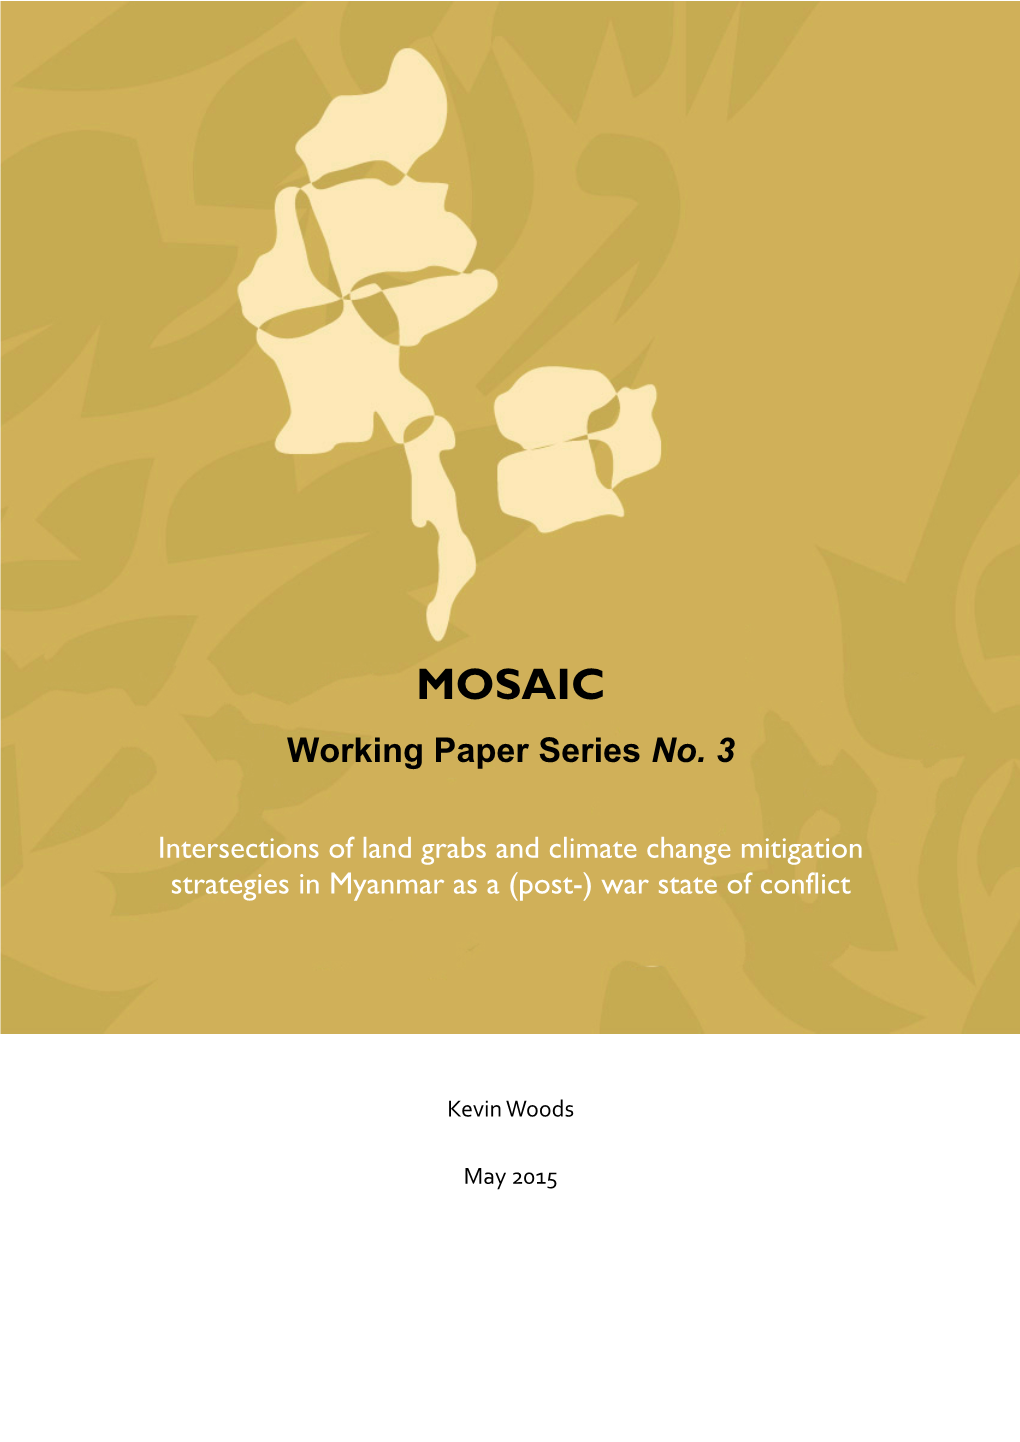 MOSAIC Working Paper Series No